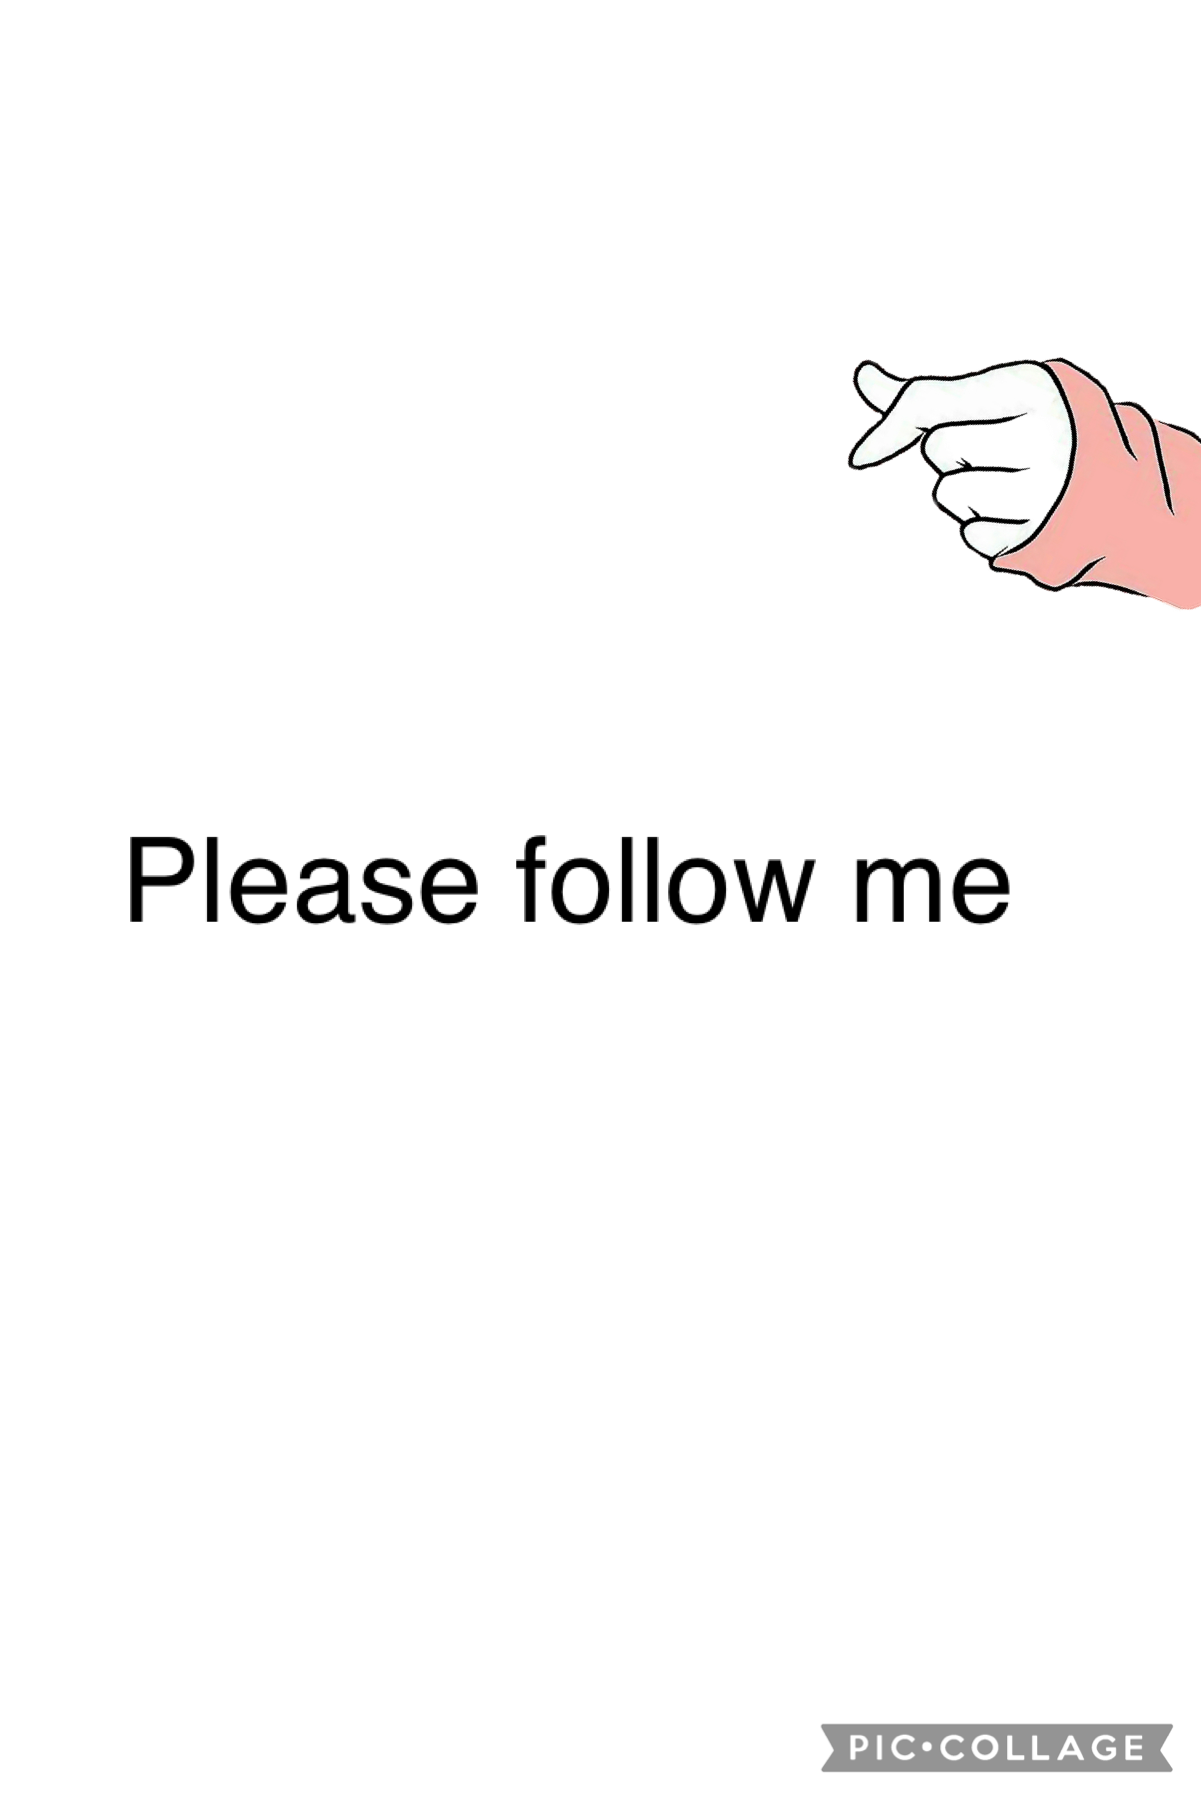 Follow me please 